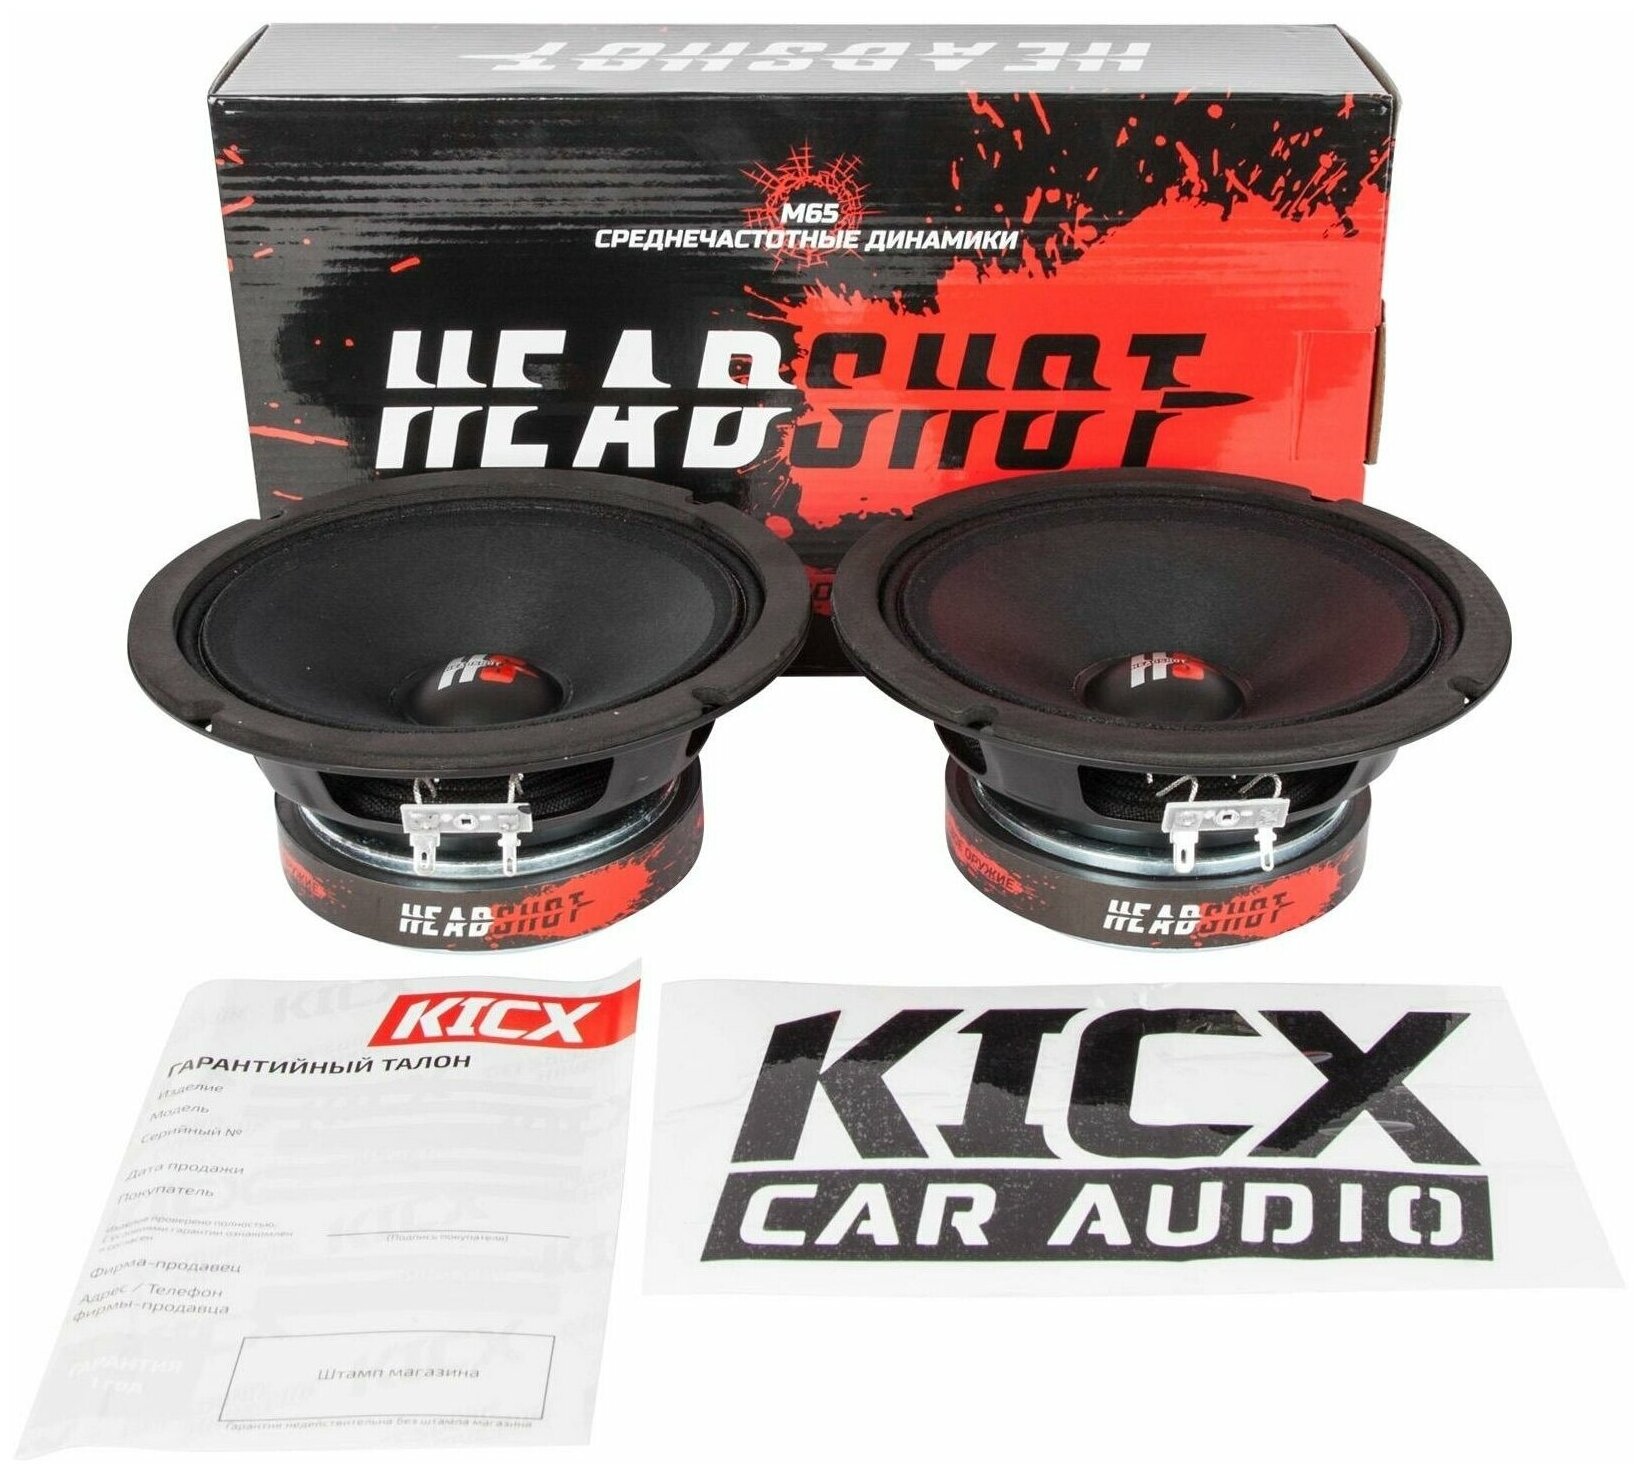 Автомобильная акустика Kicx HeadShot M65